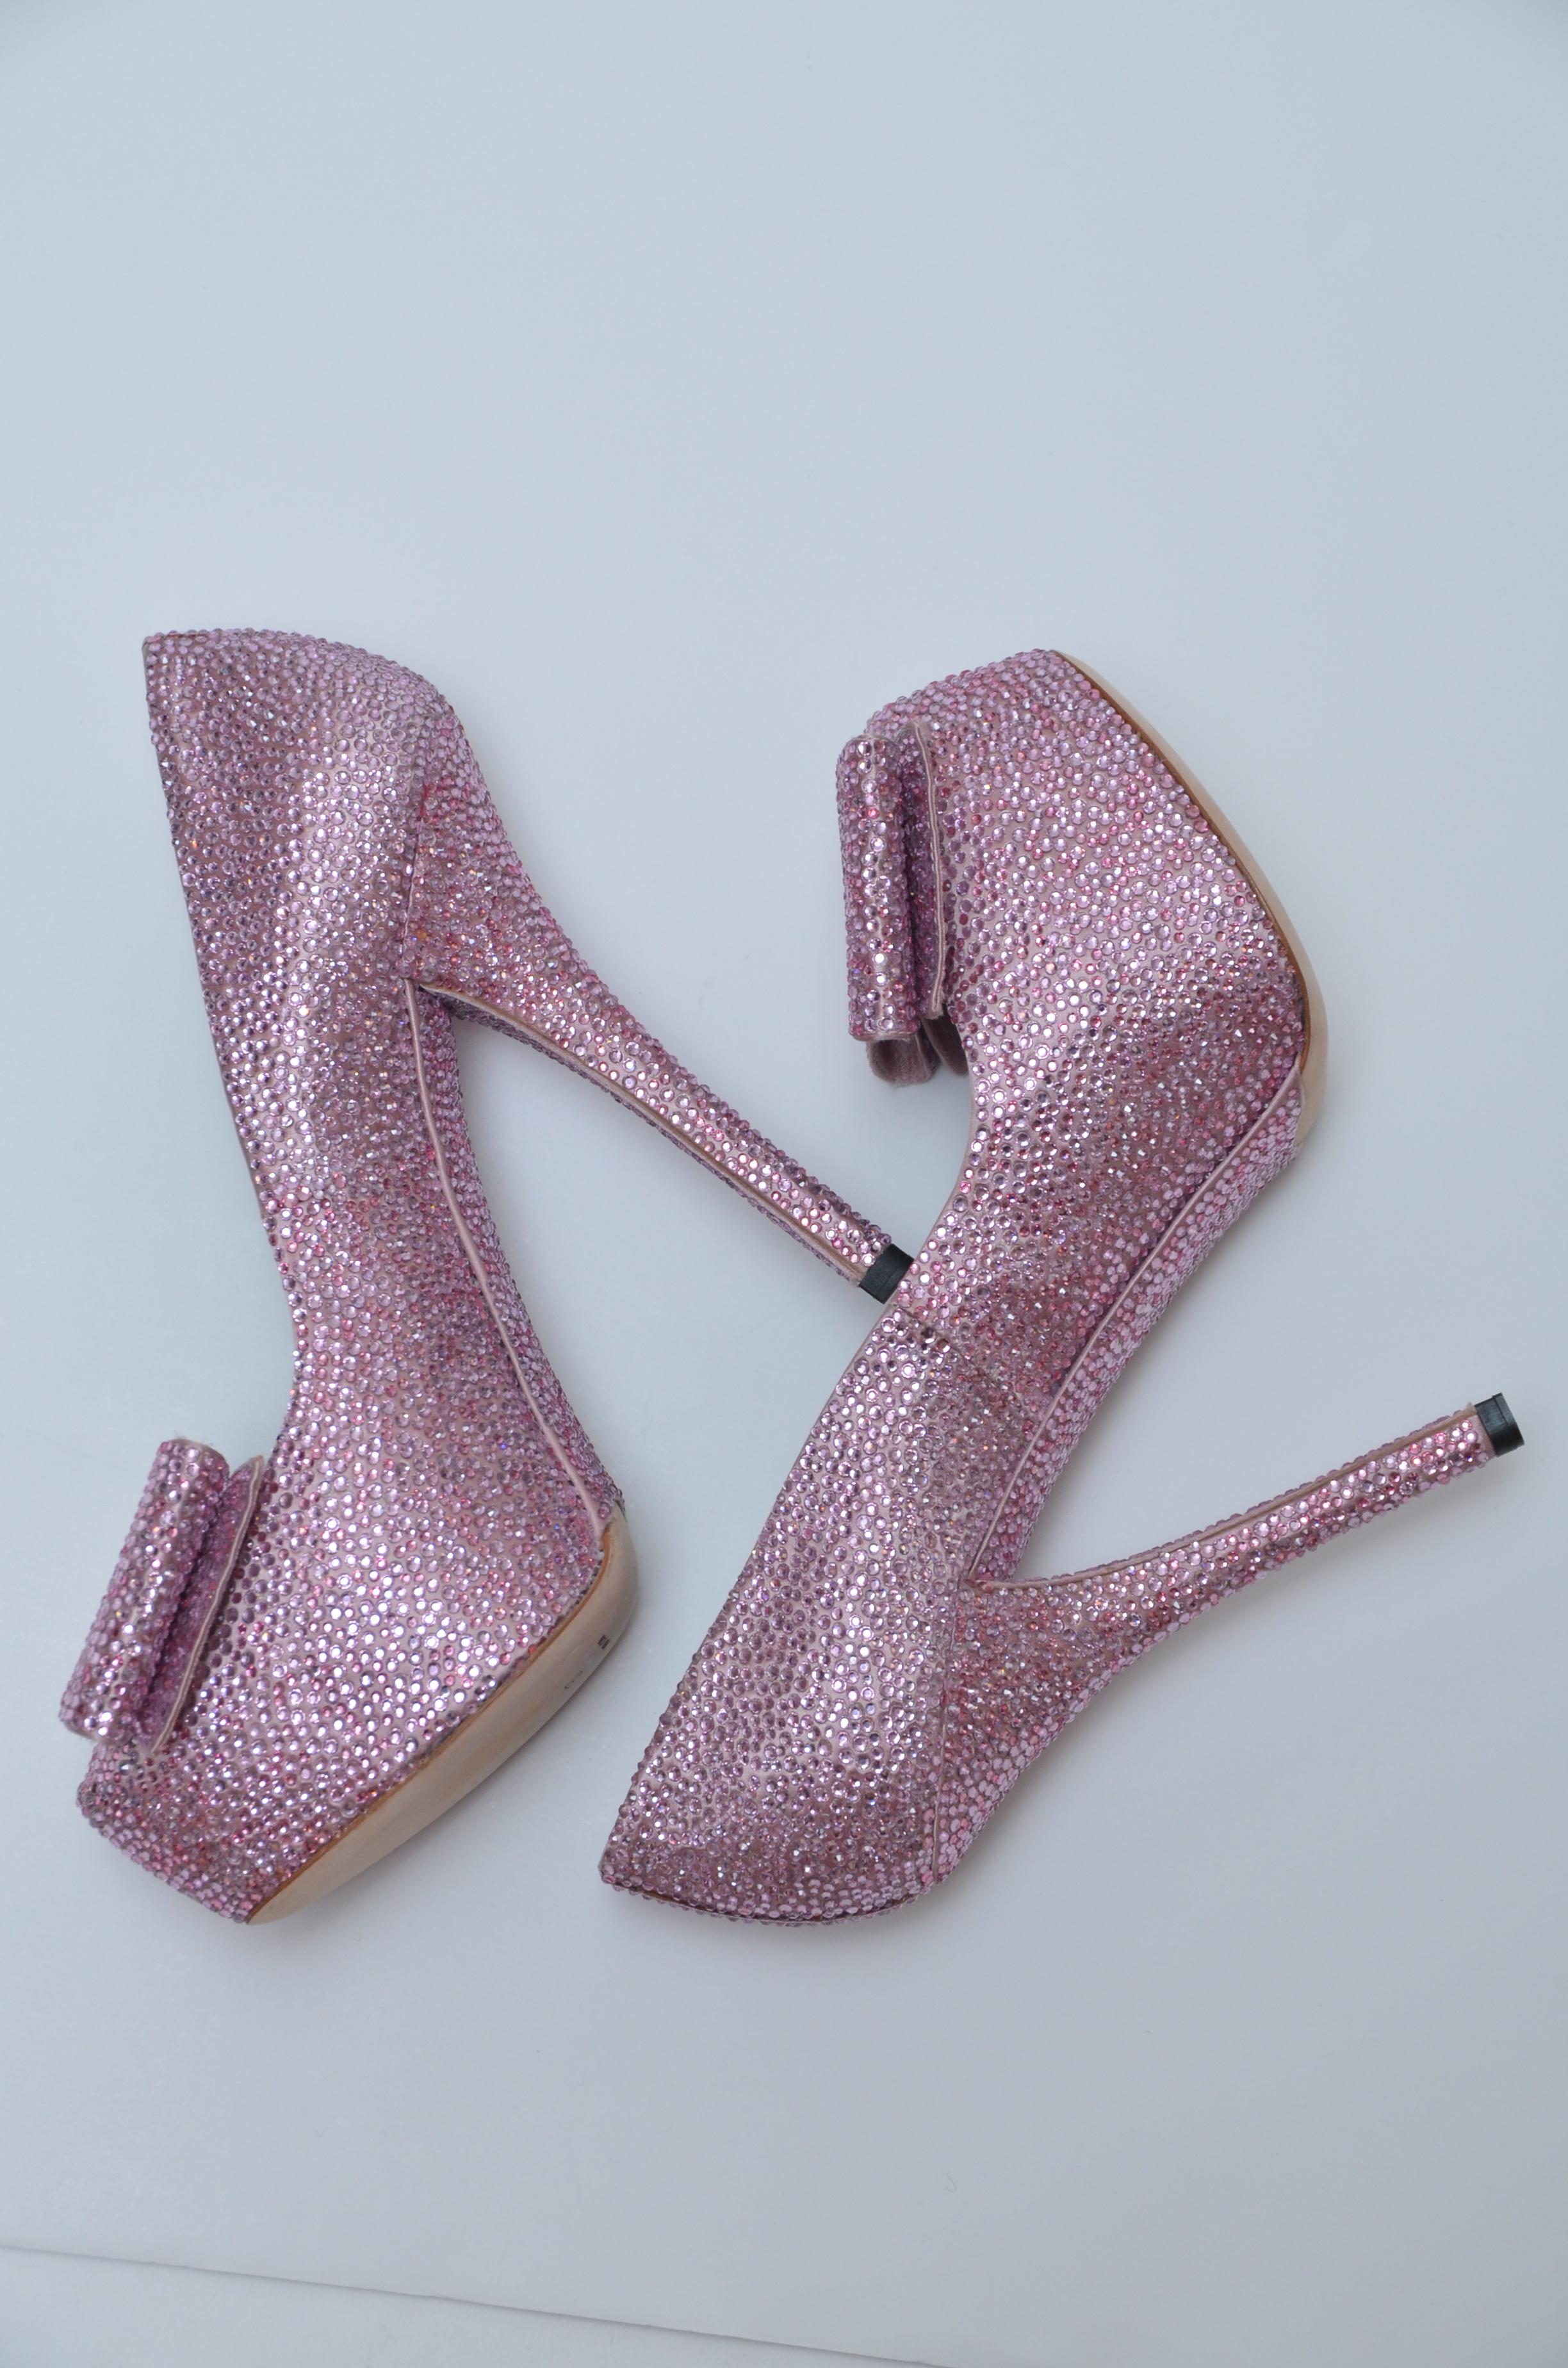 Dolce & Gabbana Swarovski Pink Strass Embellished Shoes 37 NEW   (Braun)